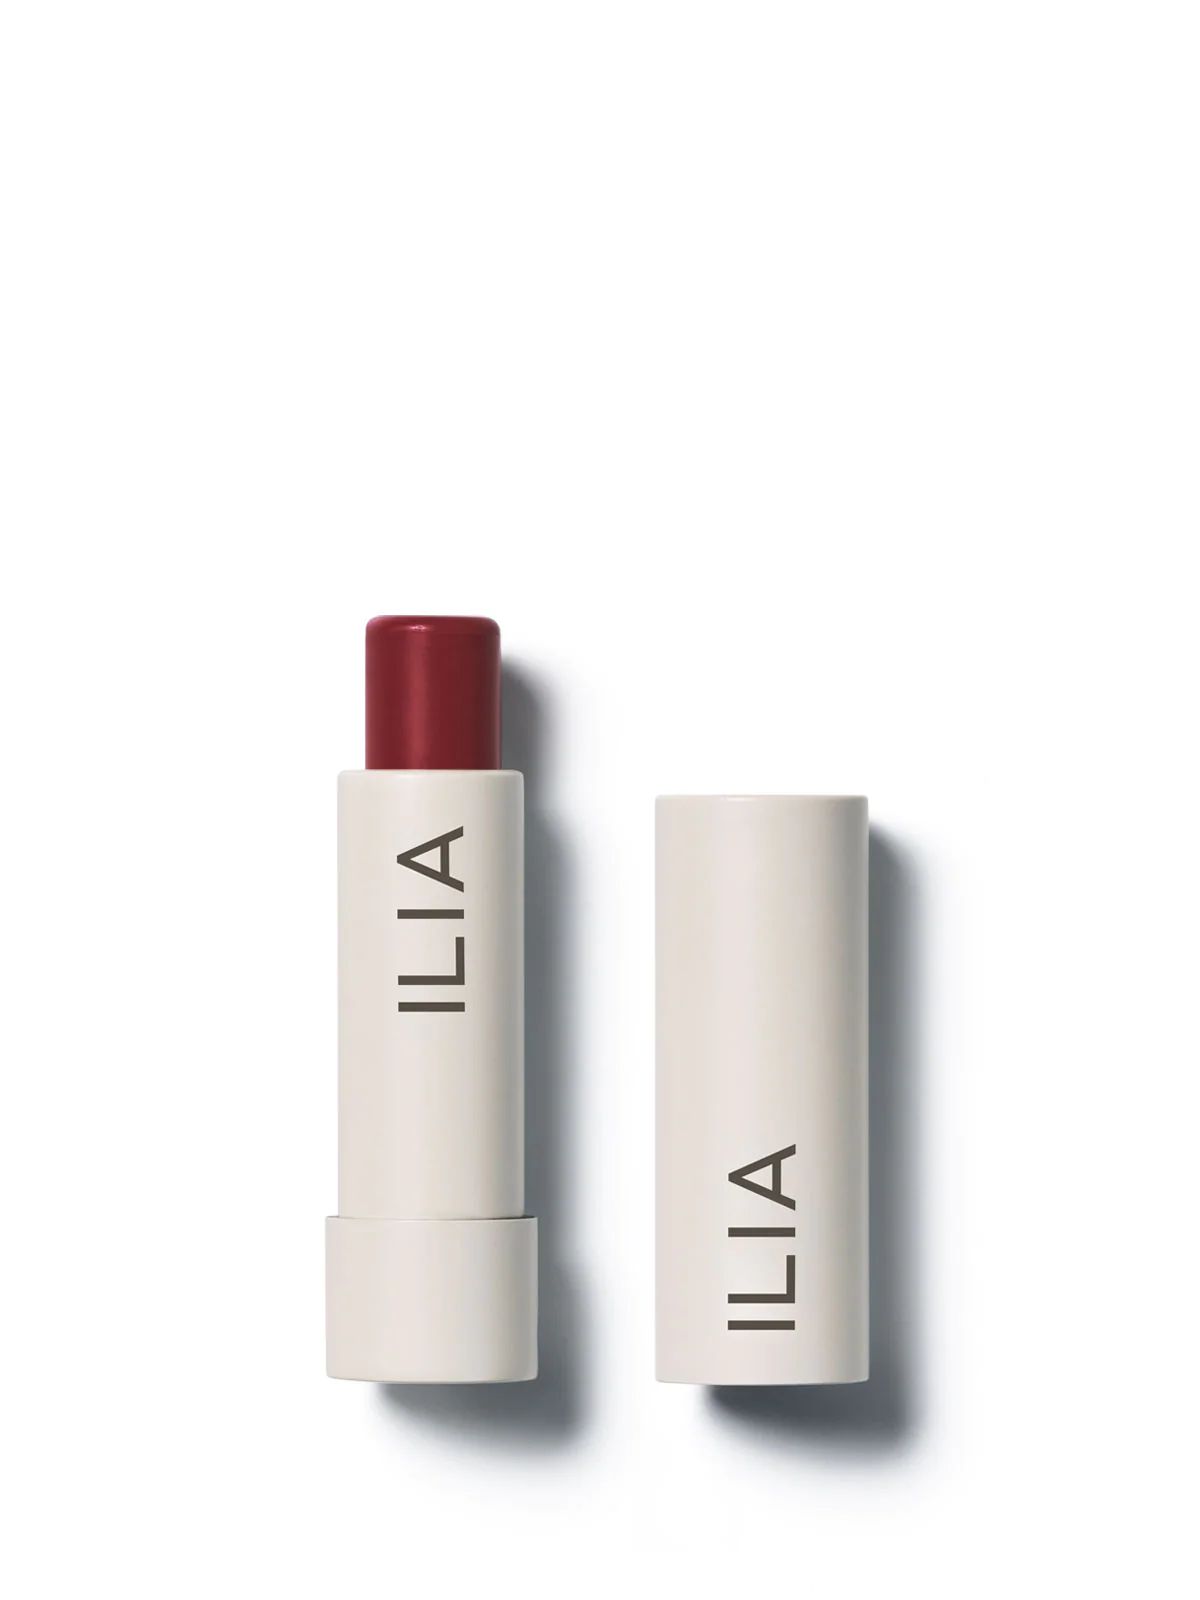 ILIA Balmy Tint: Cool Berry - Hydrating Lip Balm | ILIA Beauty